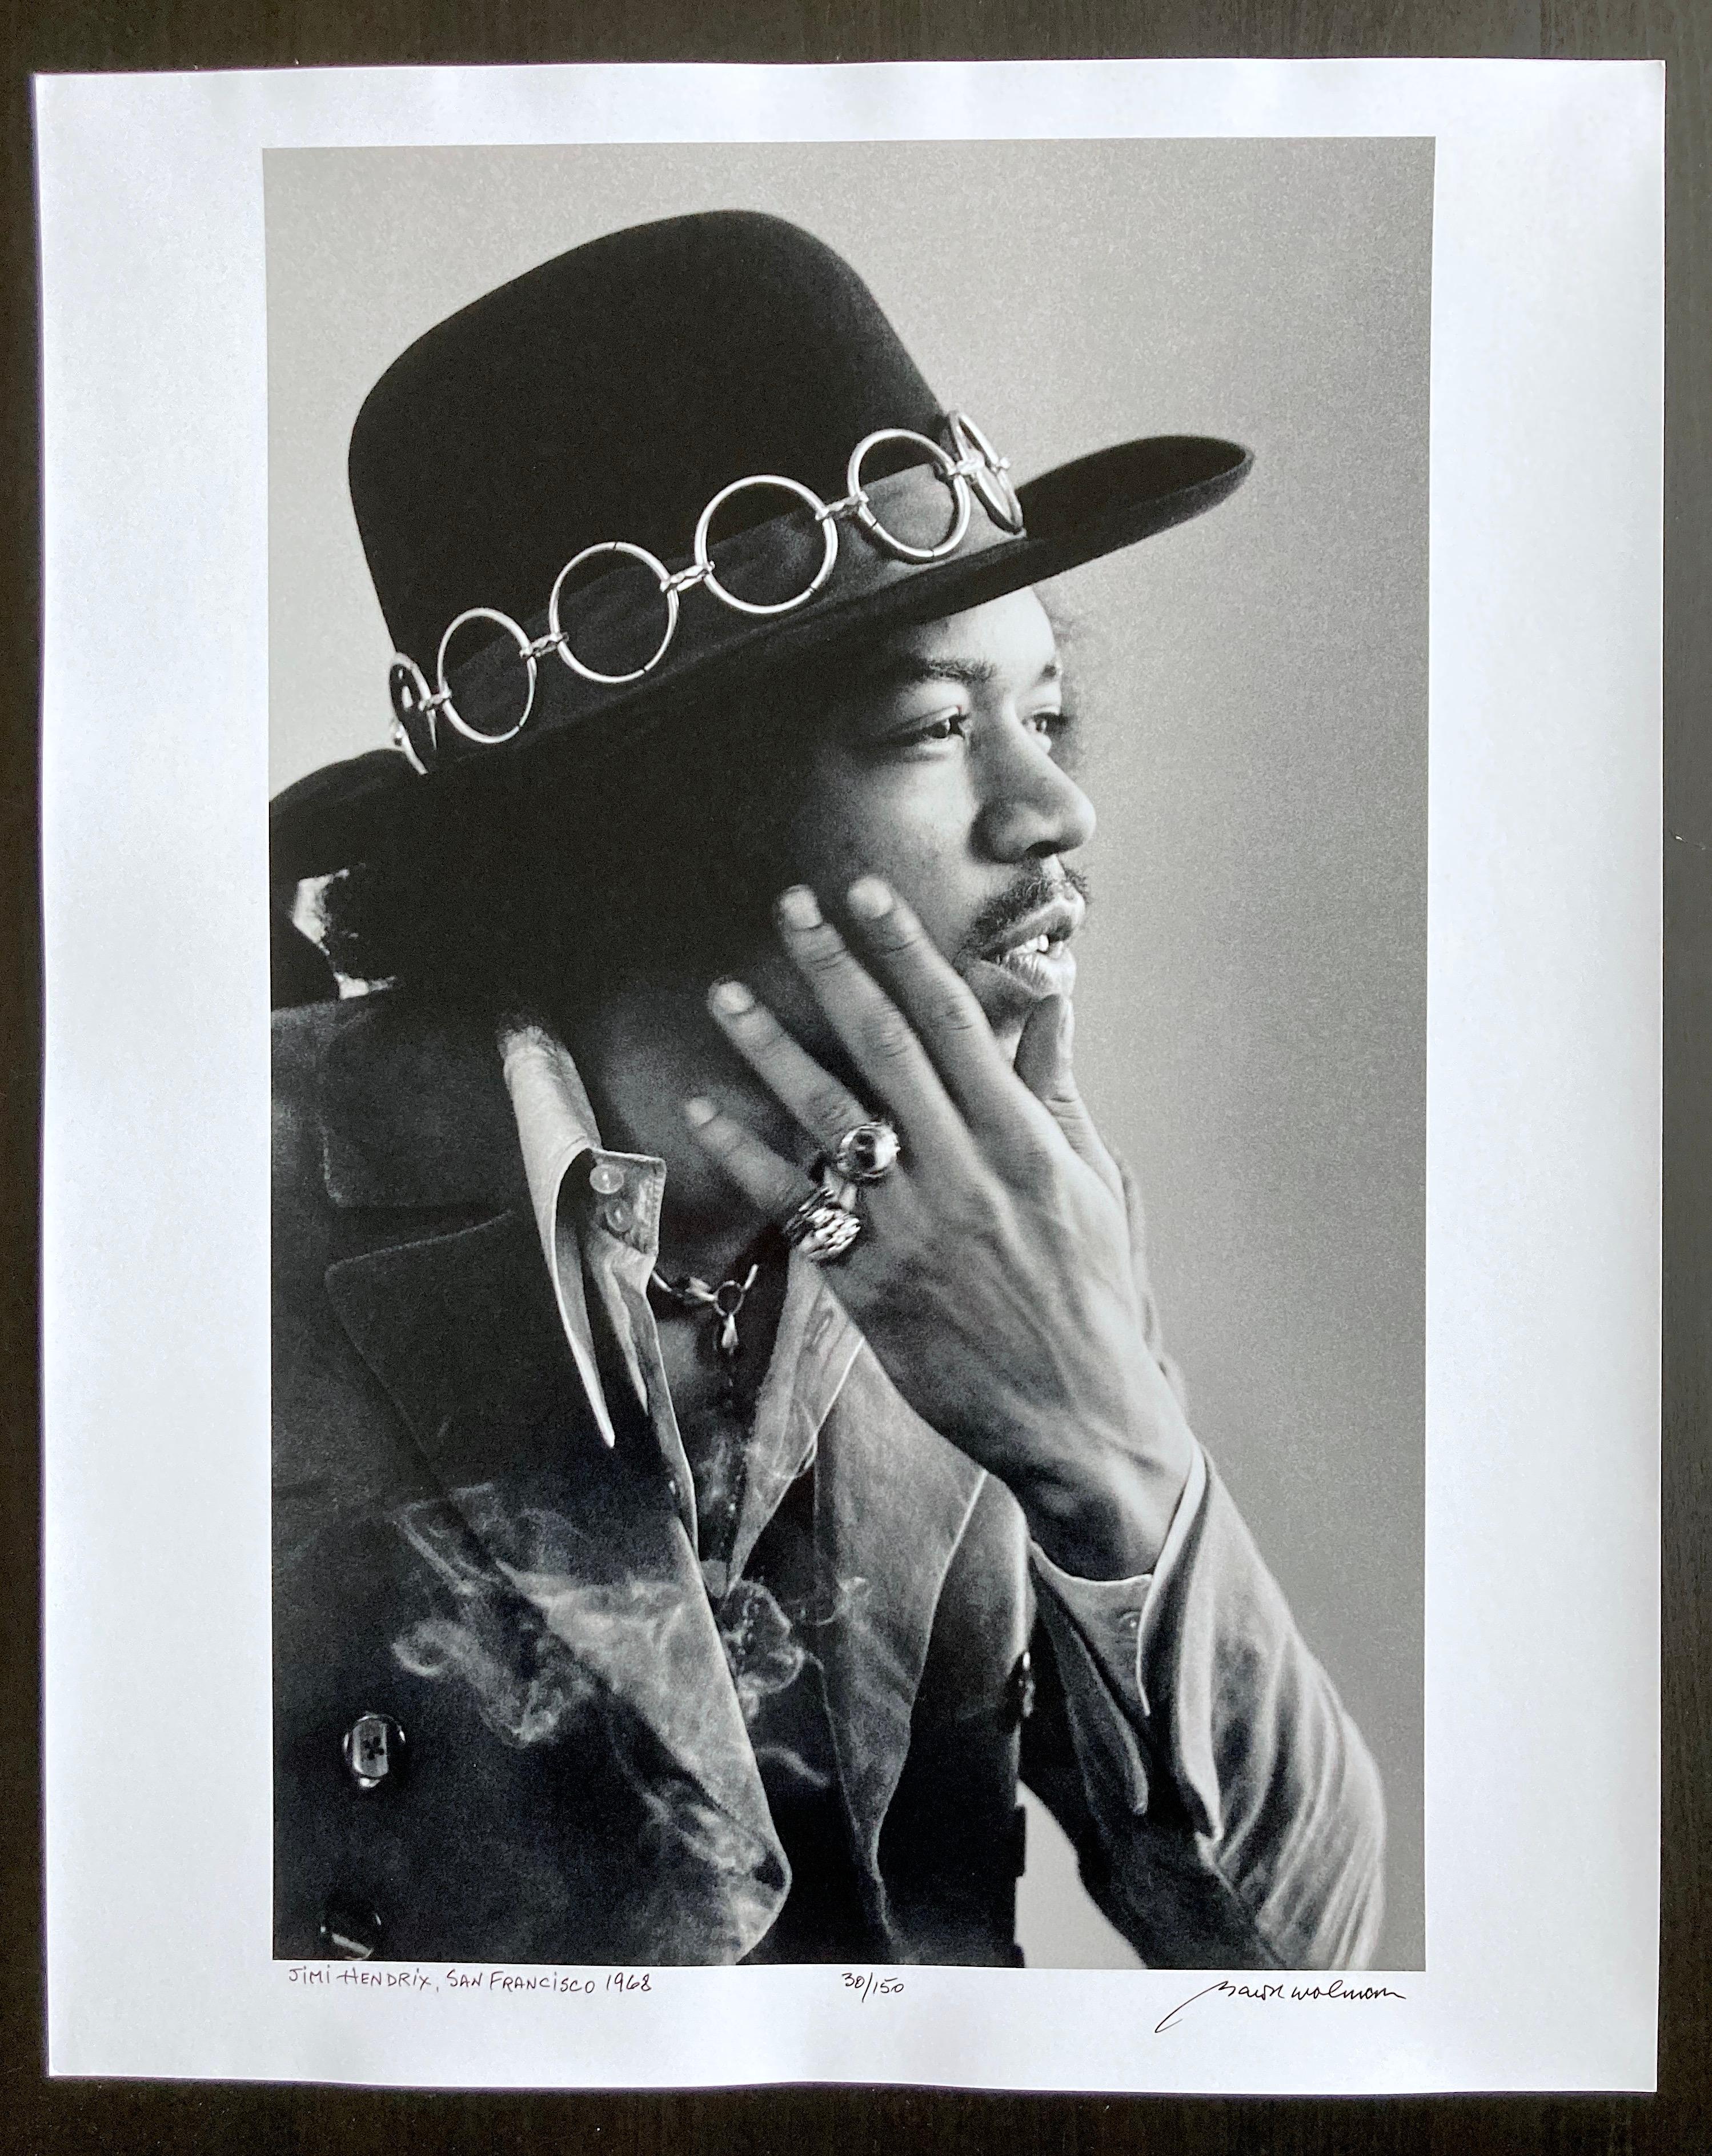 Jimi Hendrix by Baron Wolman signed limited edition 16x20" print